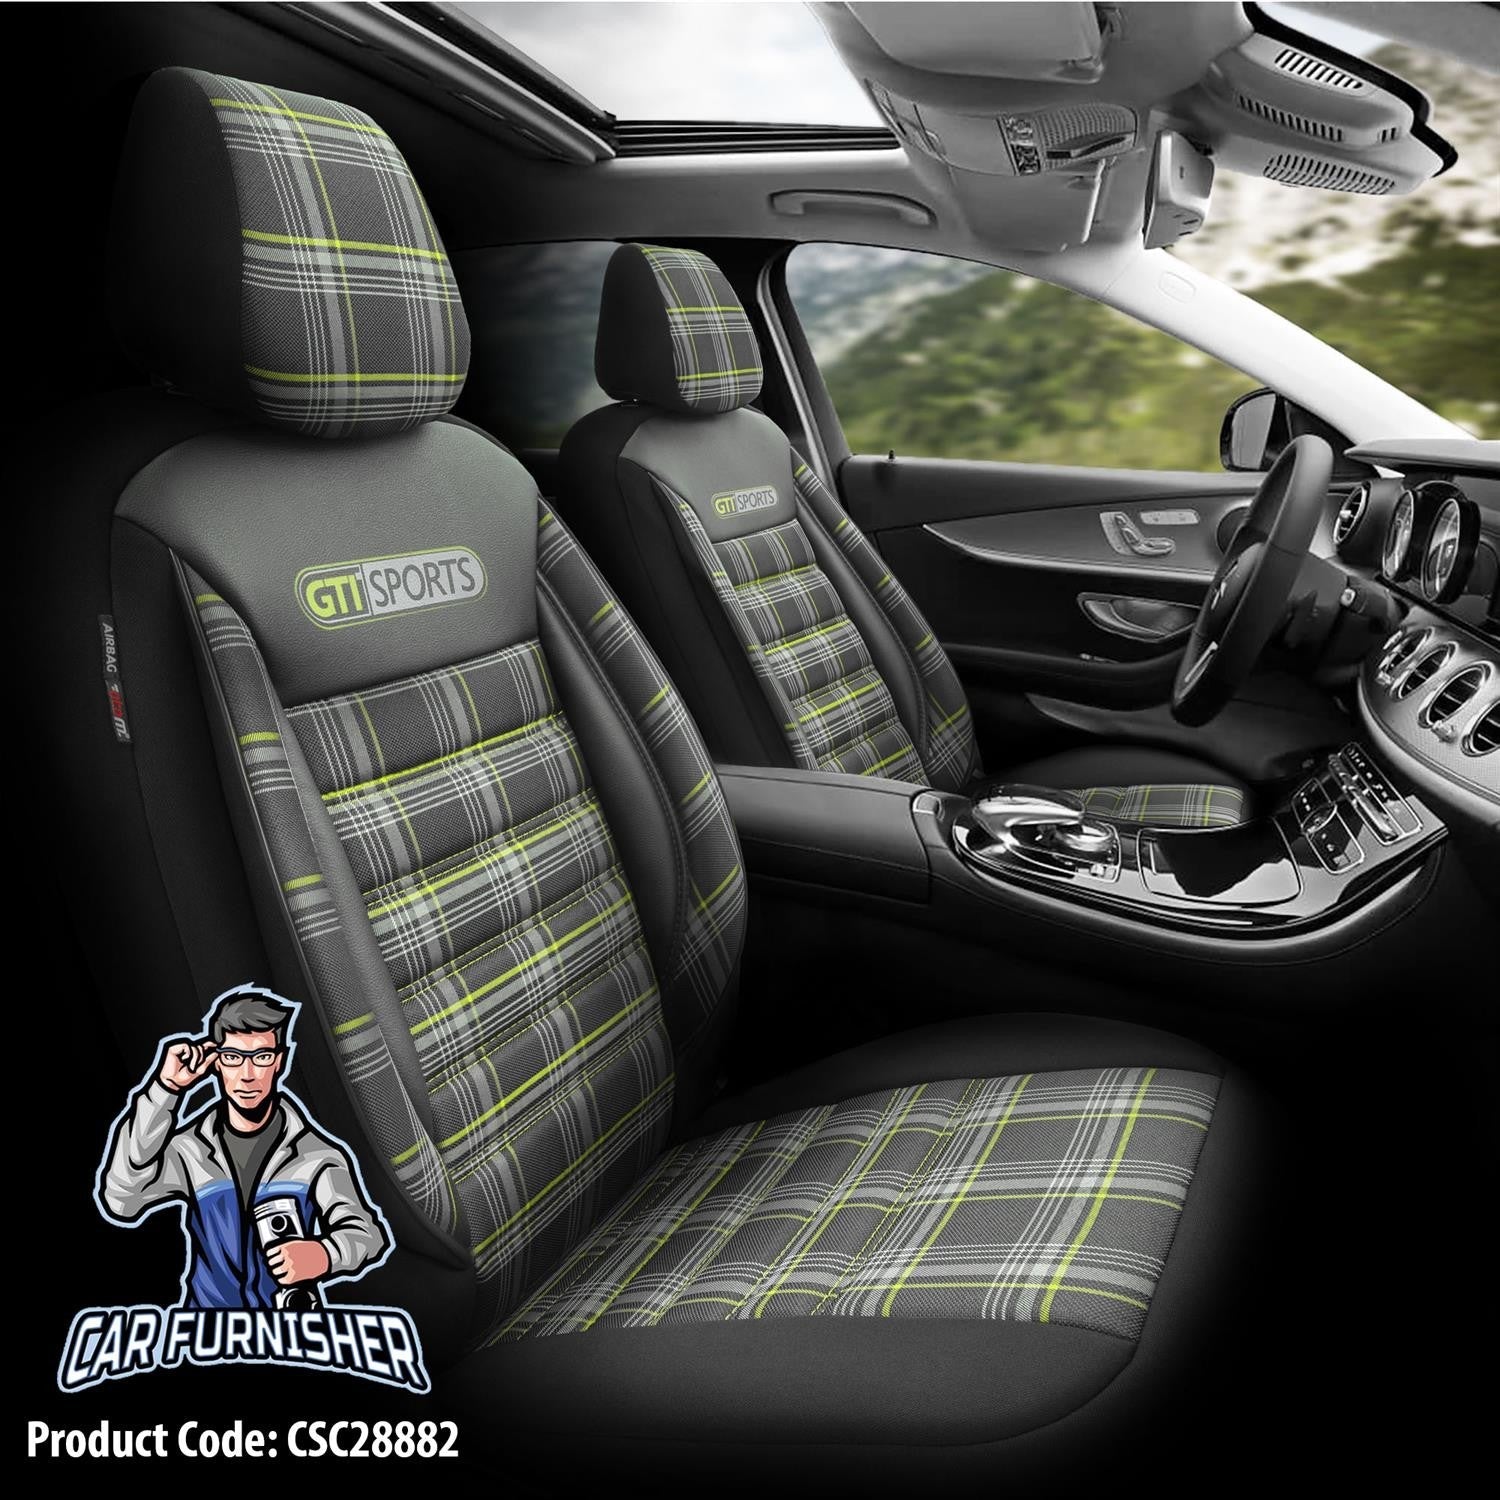 VW Golf GTI Car Seat Covers MK4/MK5/MK6/MK7 1998-2020 Special Series Green Leather & Fabric